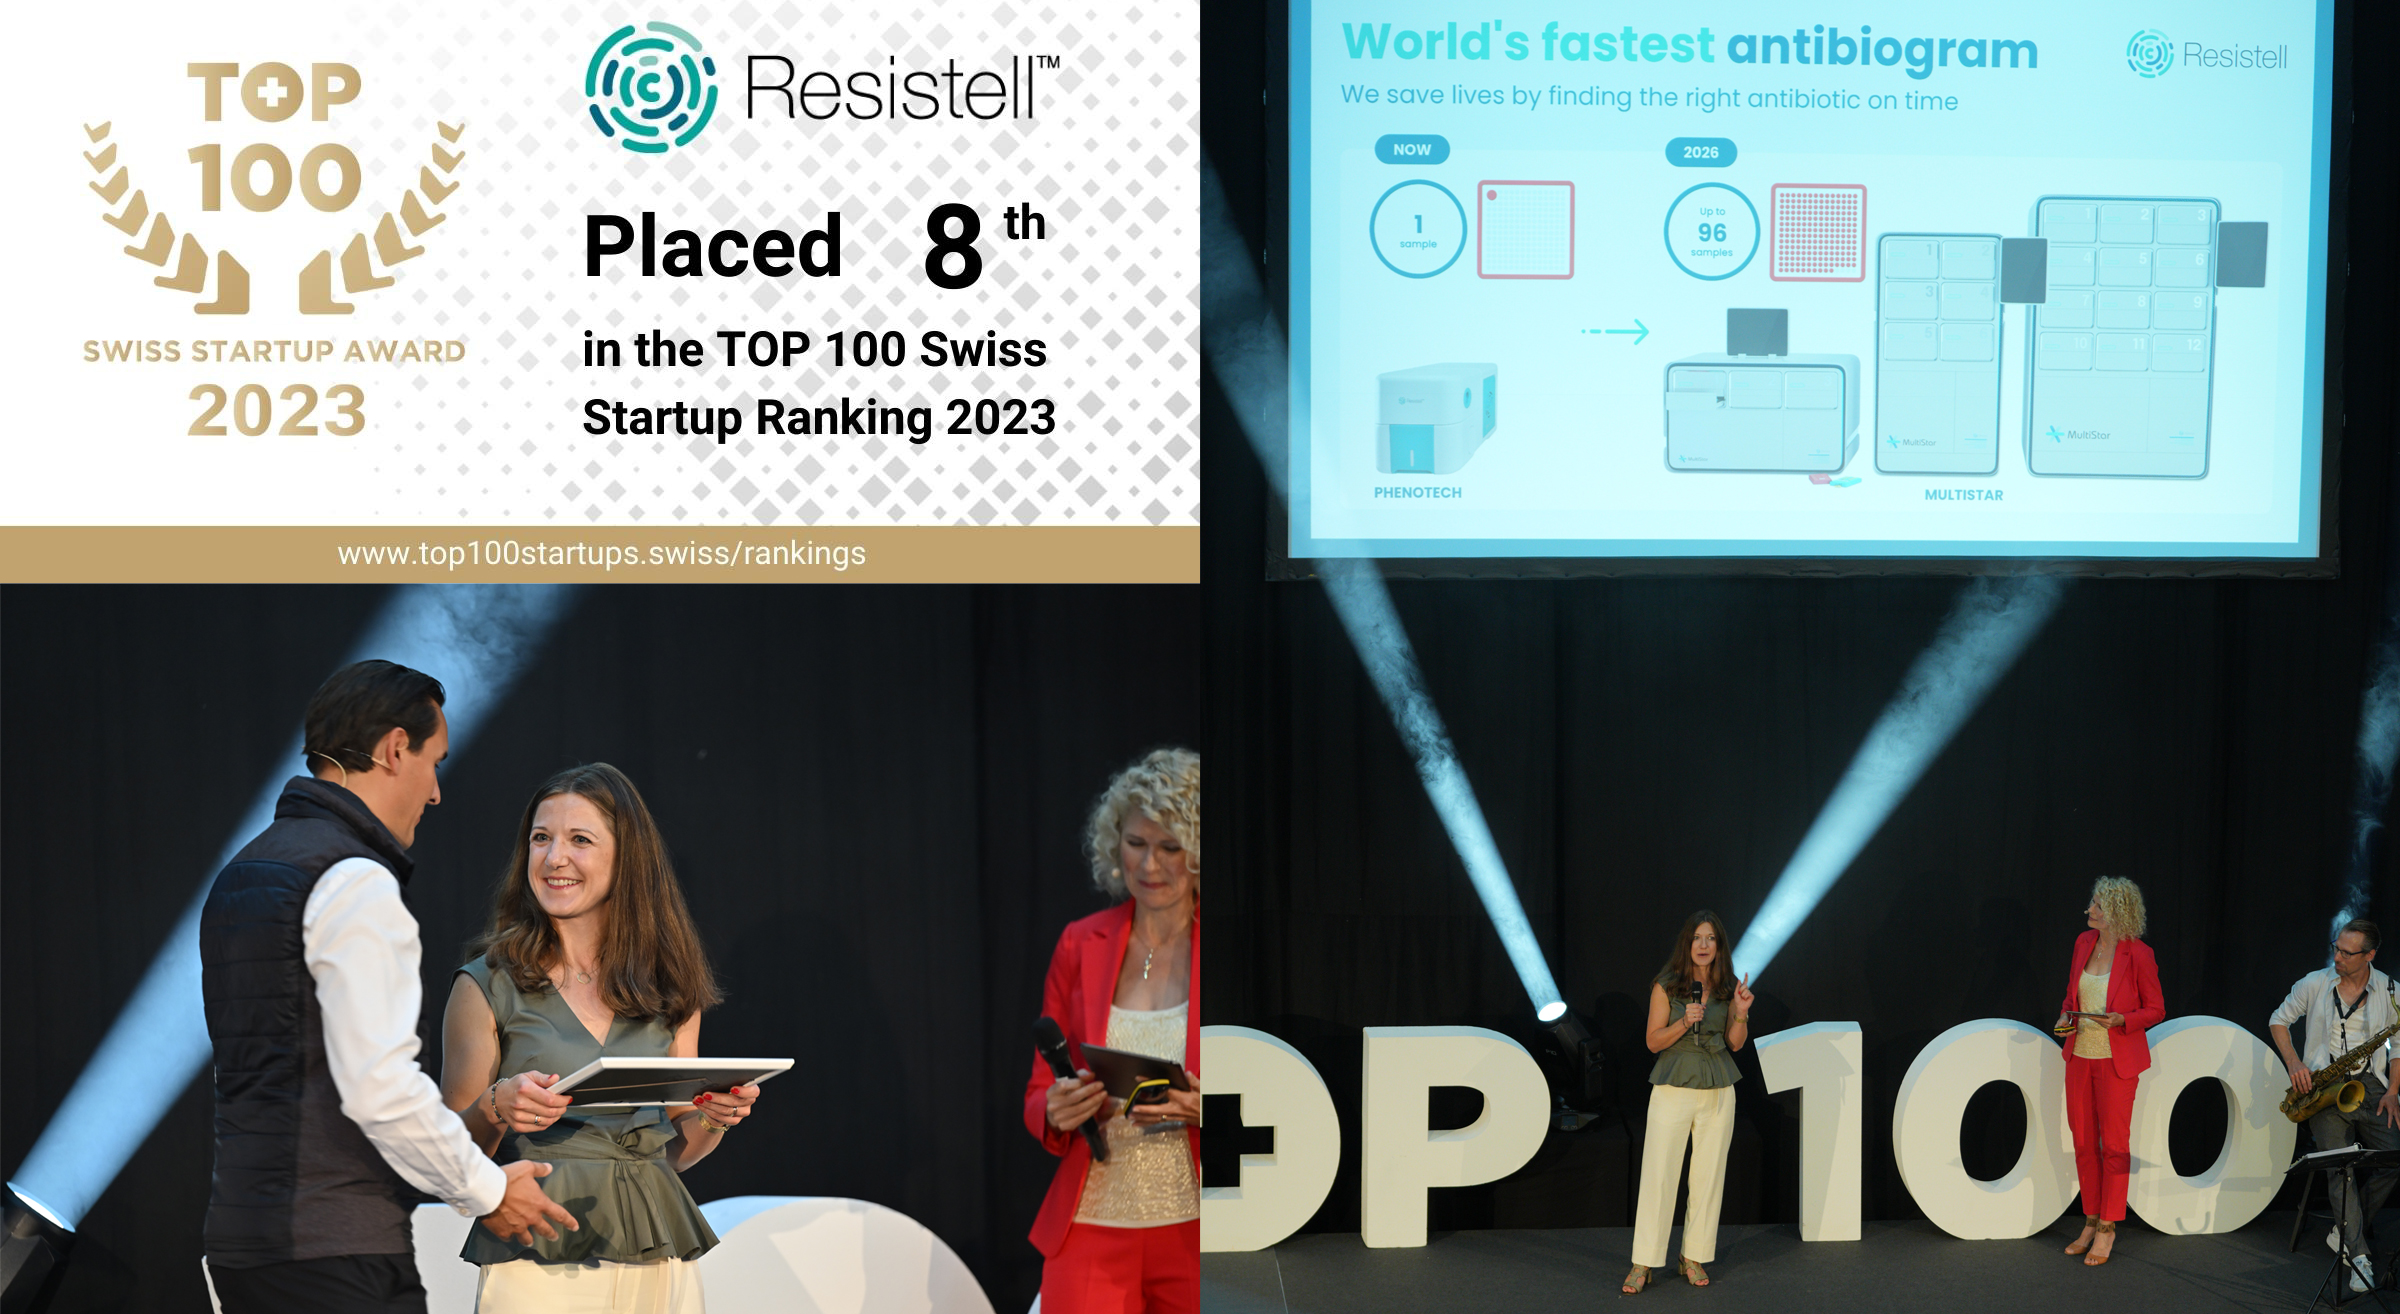 Resistell among TOP 10 best start-ups 2023 in Switzerland 